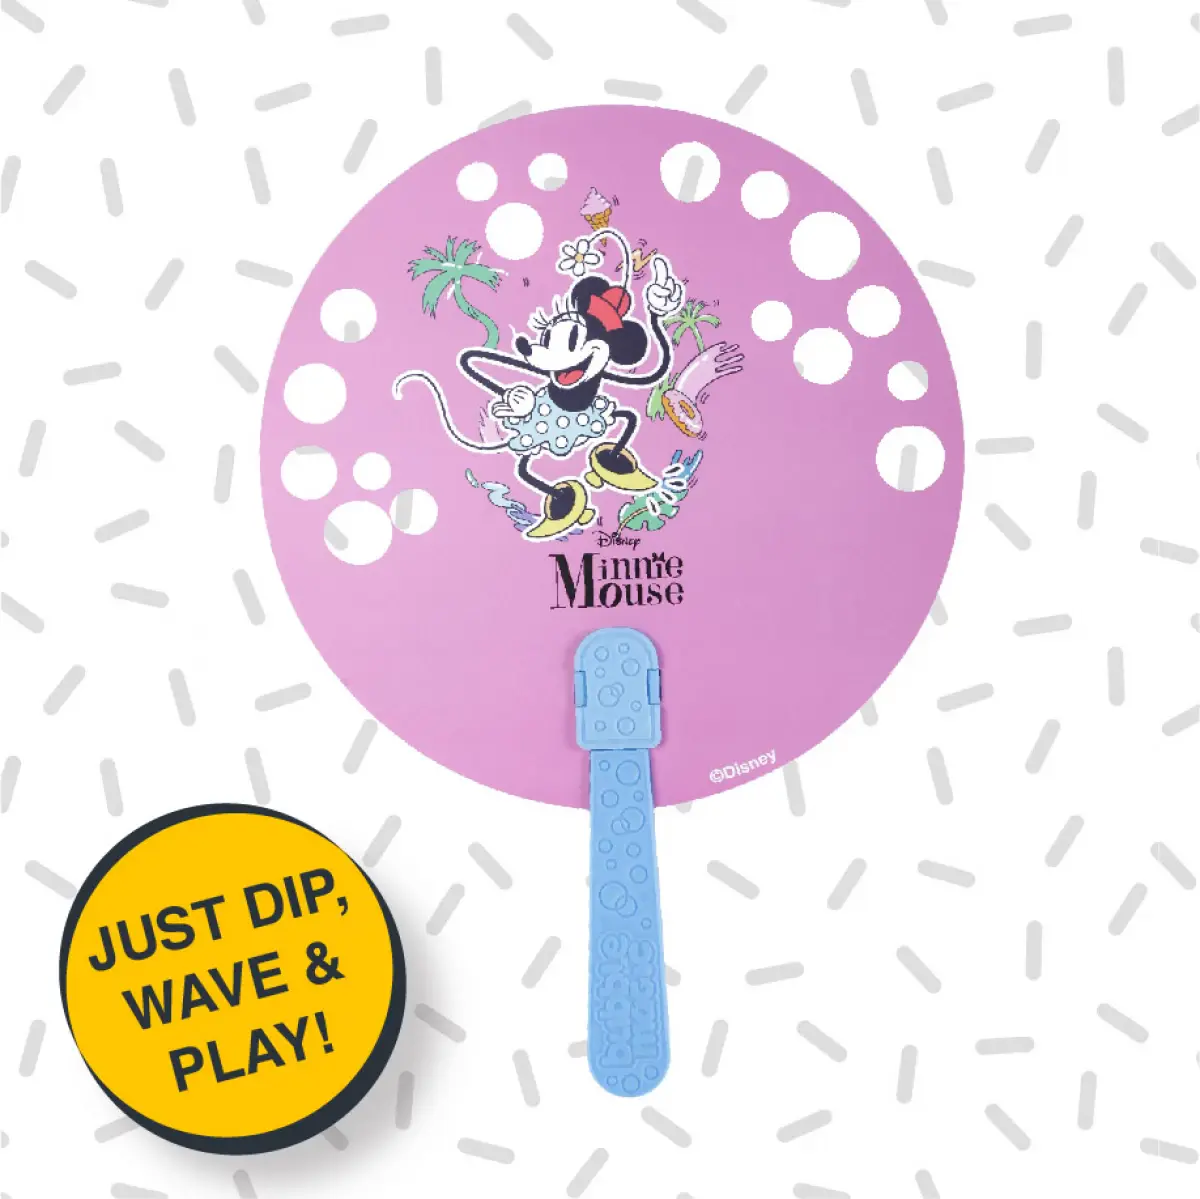 Bubble Magic Fan Bubs Minnie Mouse Bubble Solution For Kids of Age 3Y+, Multicolour